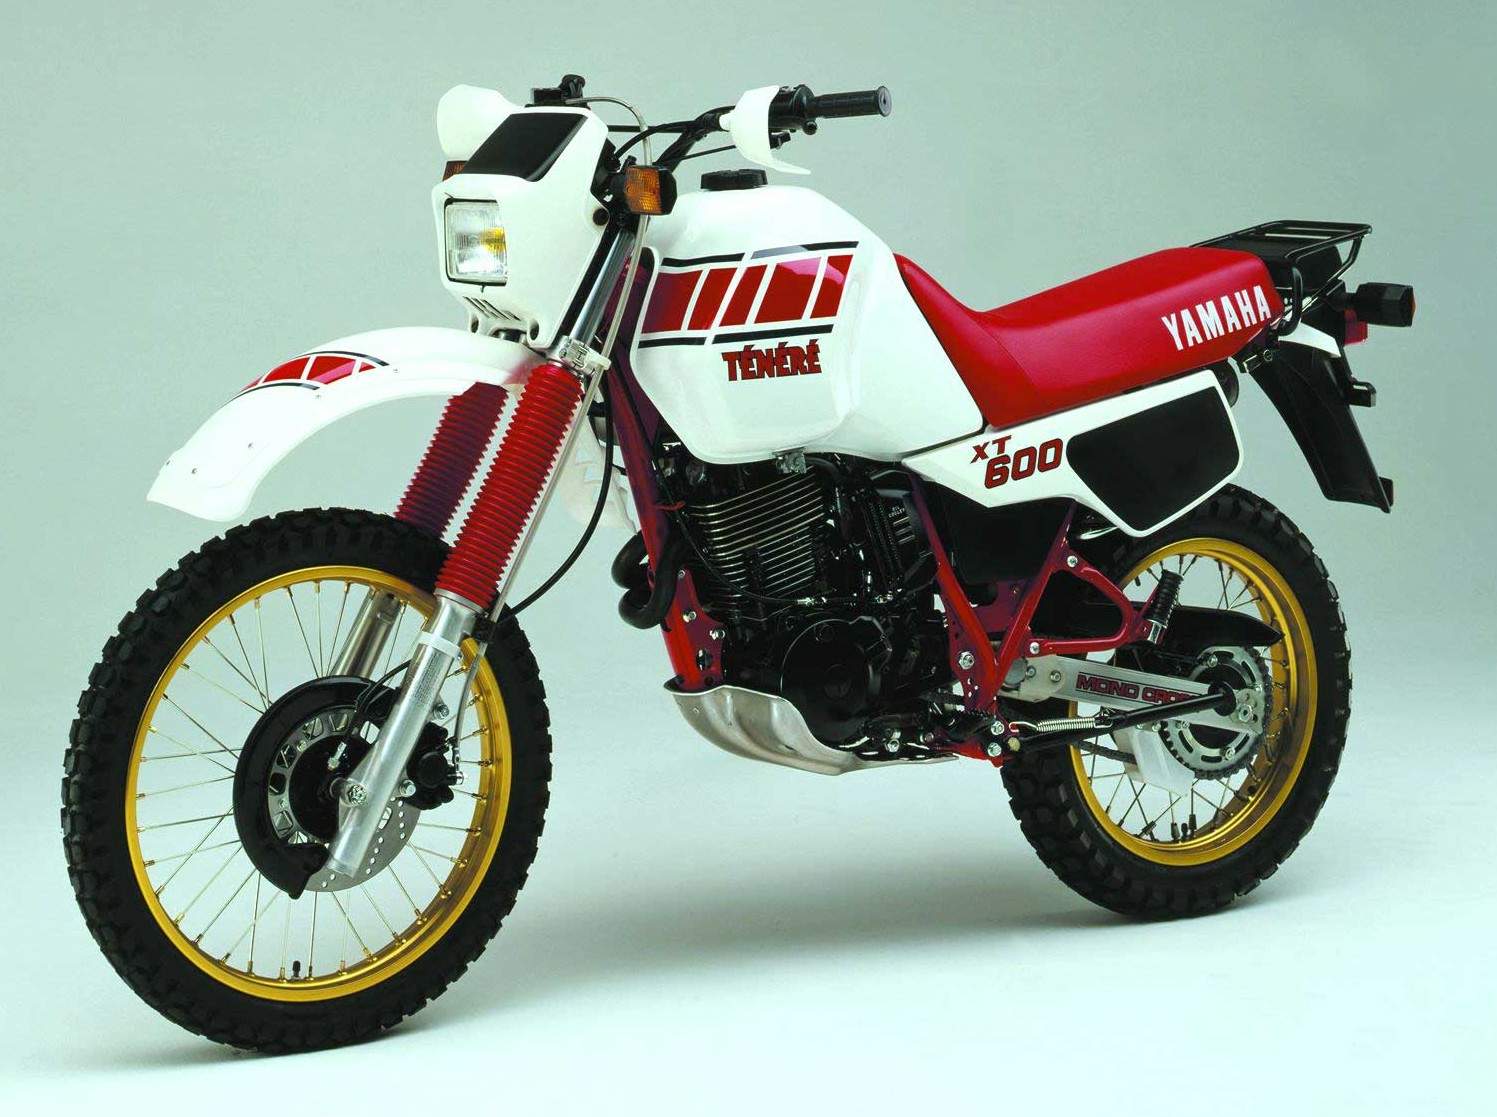 Yamaha XT 500 1982 photo - 1